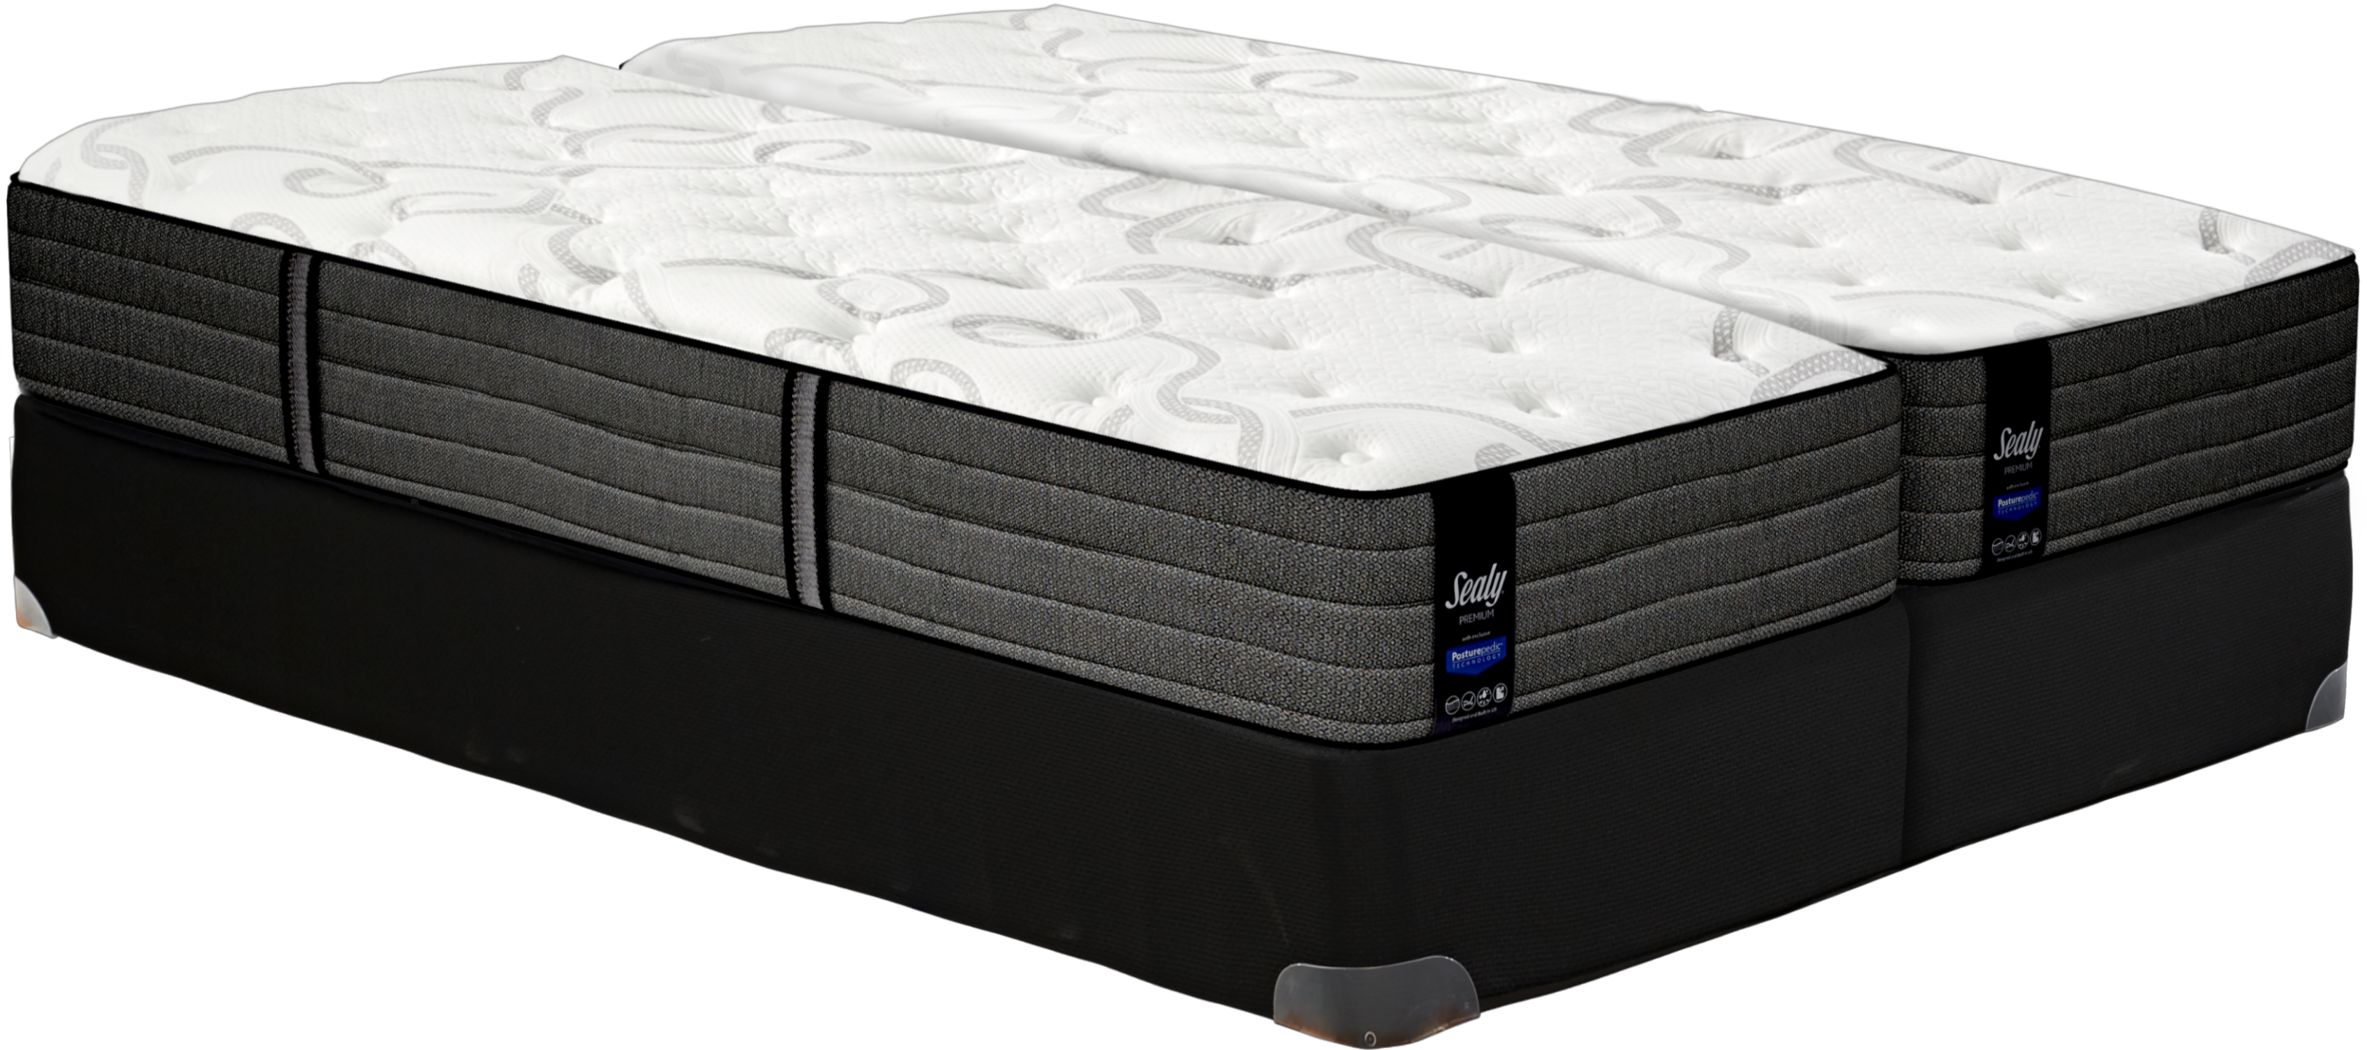 low profile split king adjustable mattress